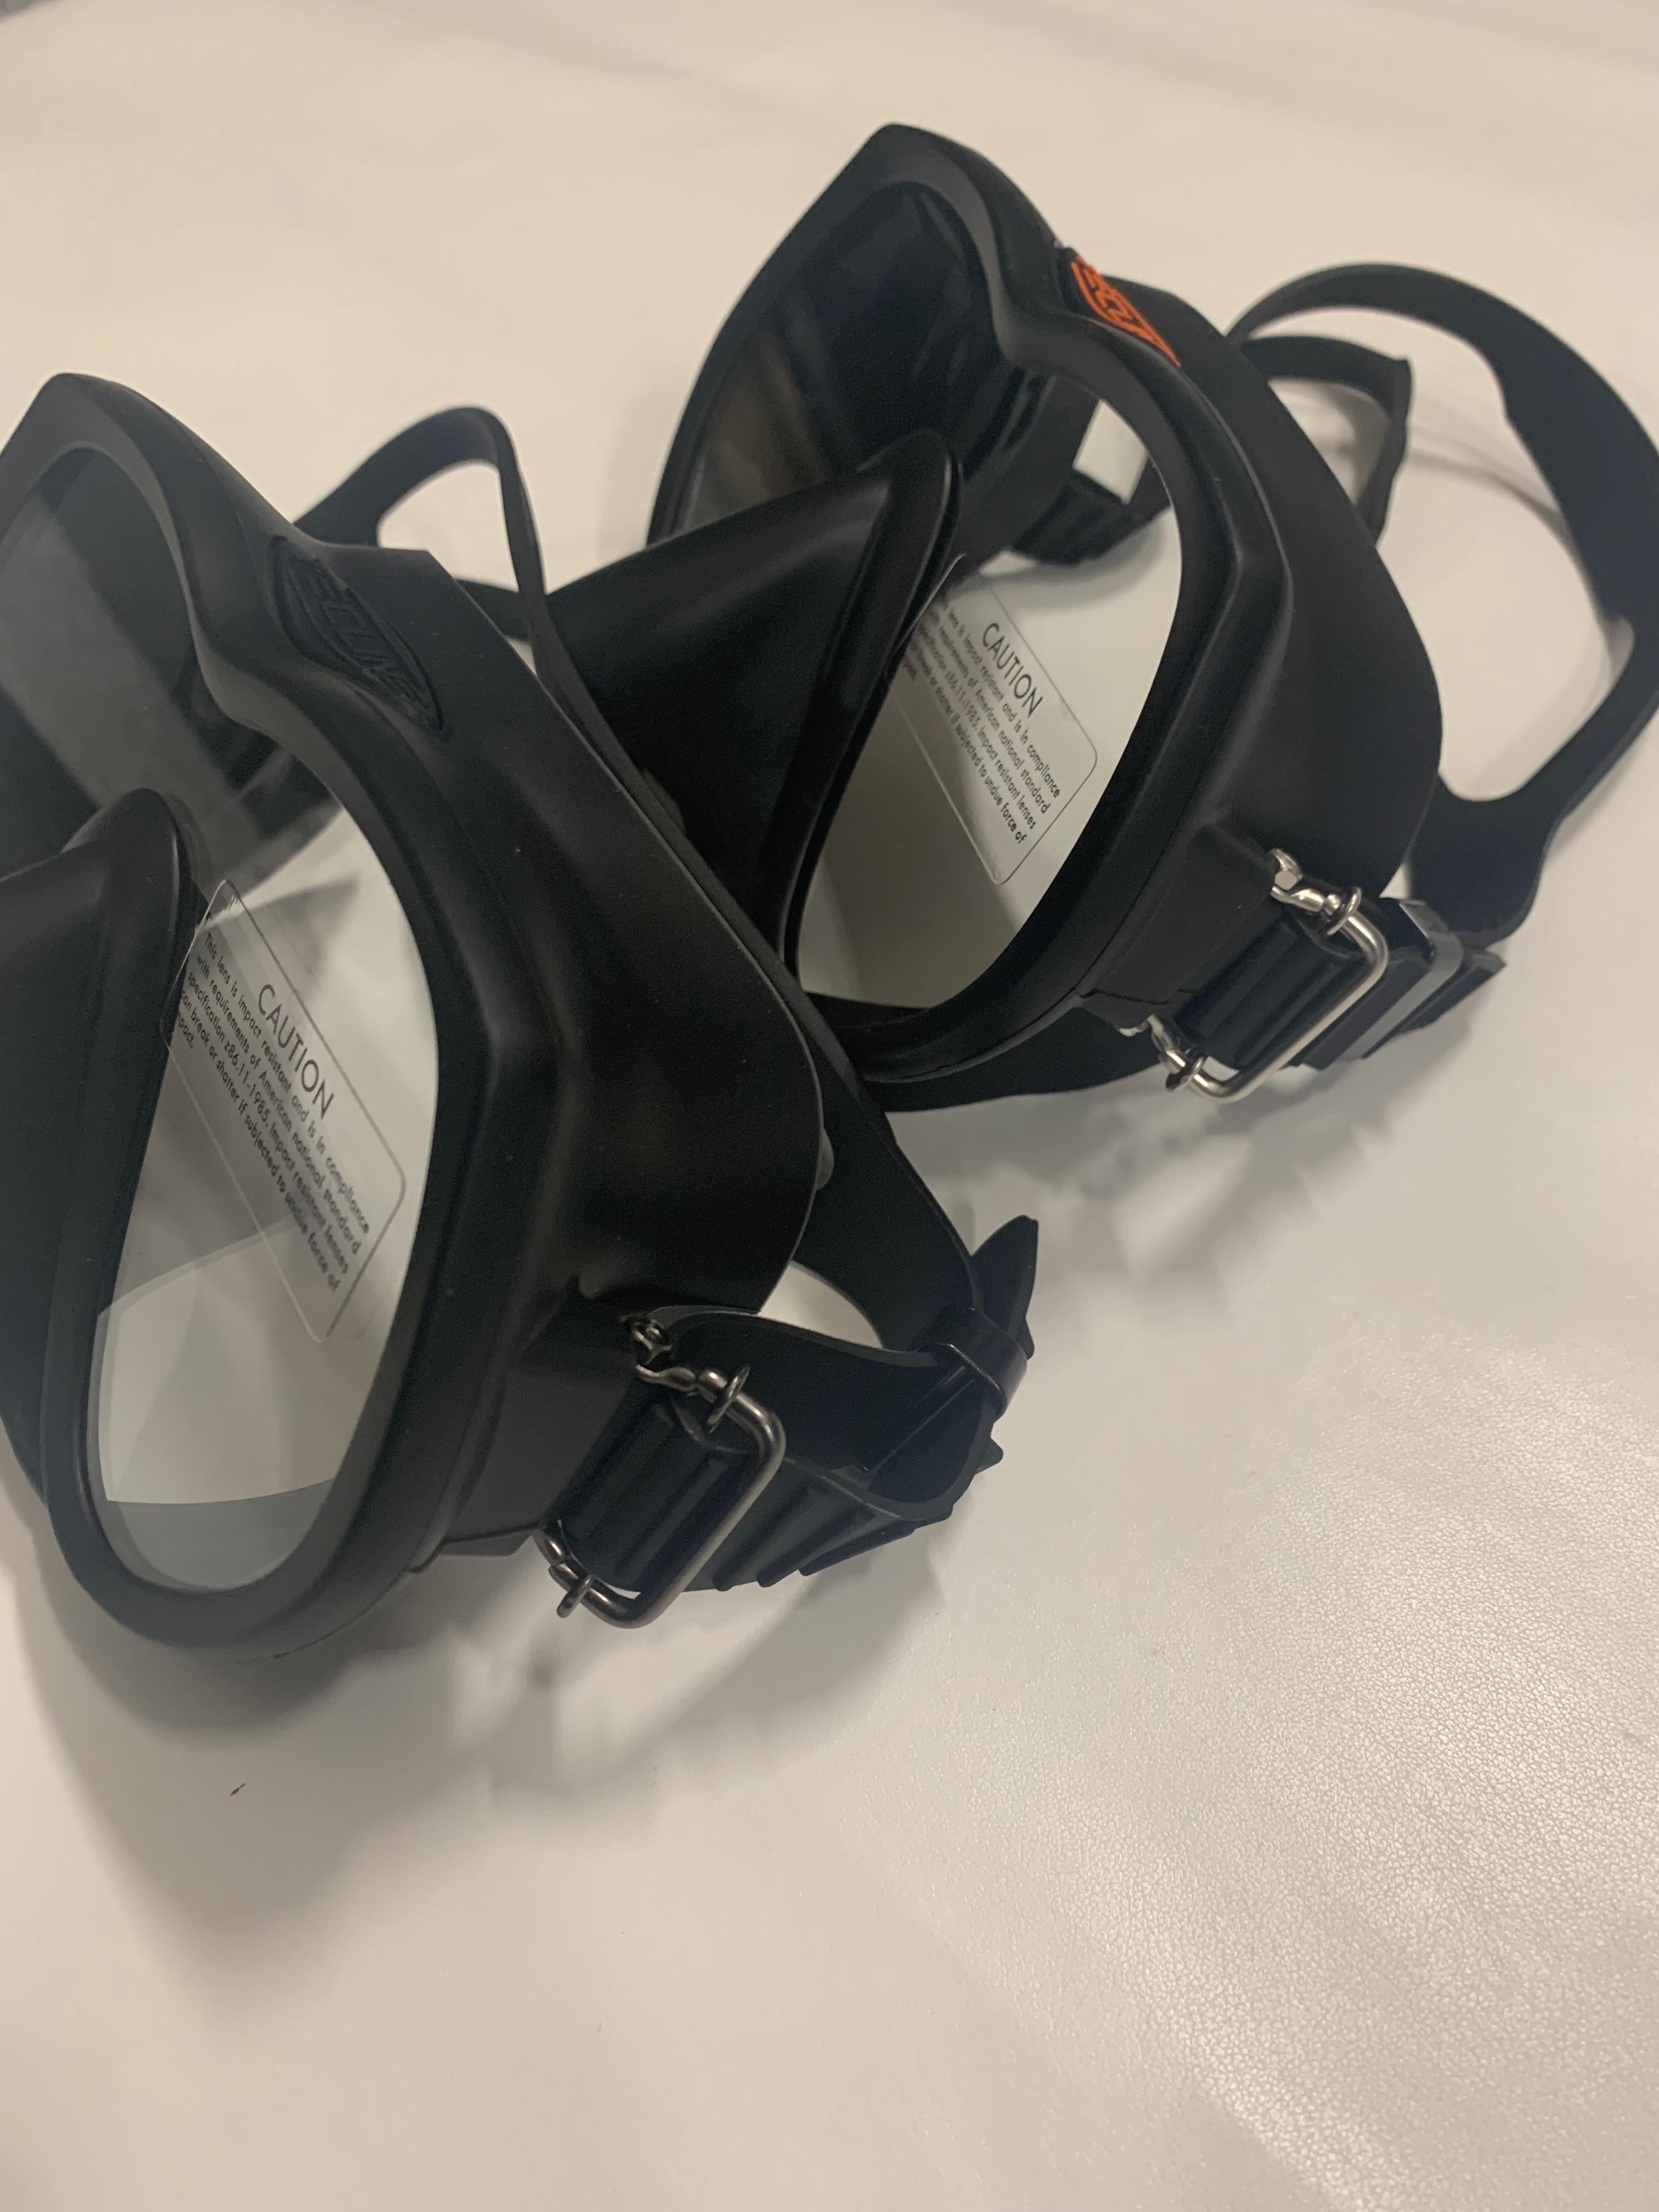 Tecline Superview Frameless Maske